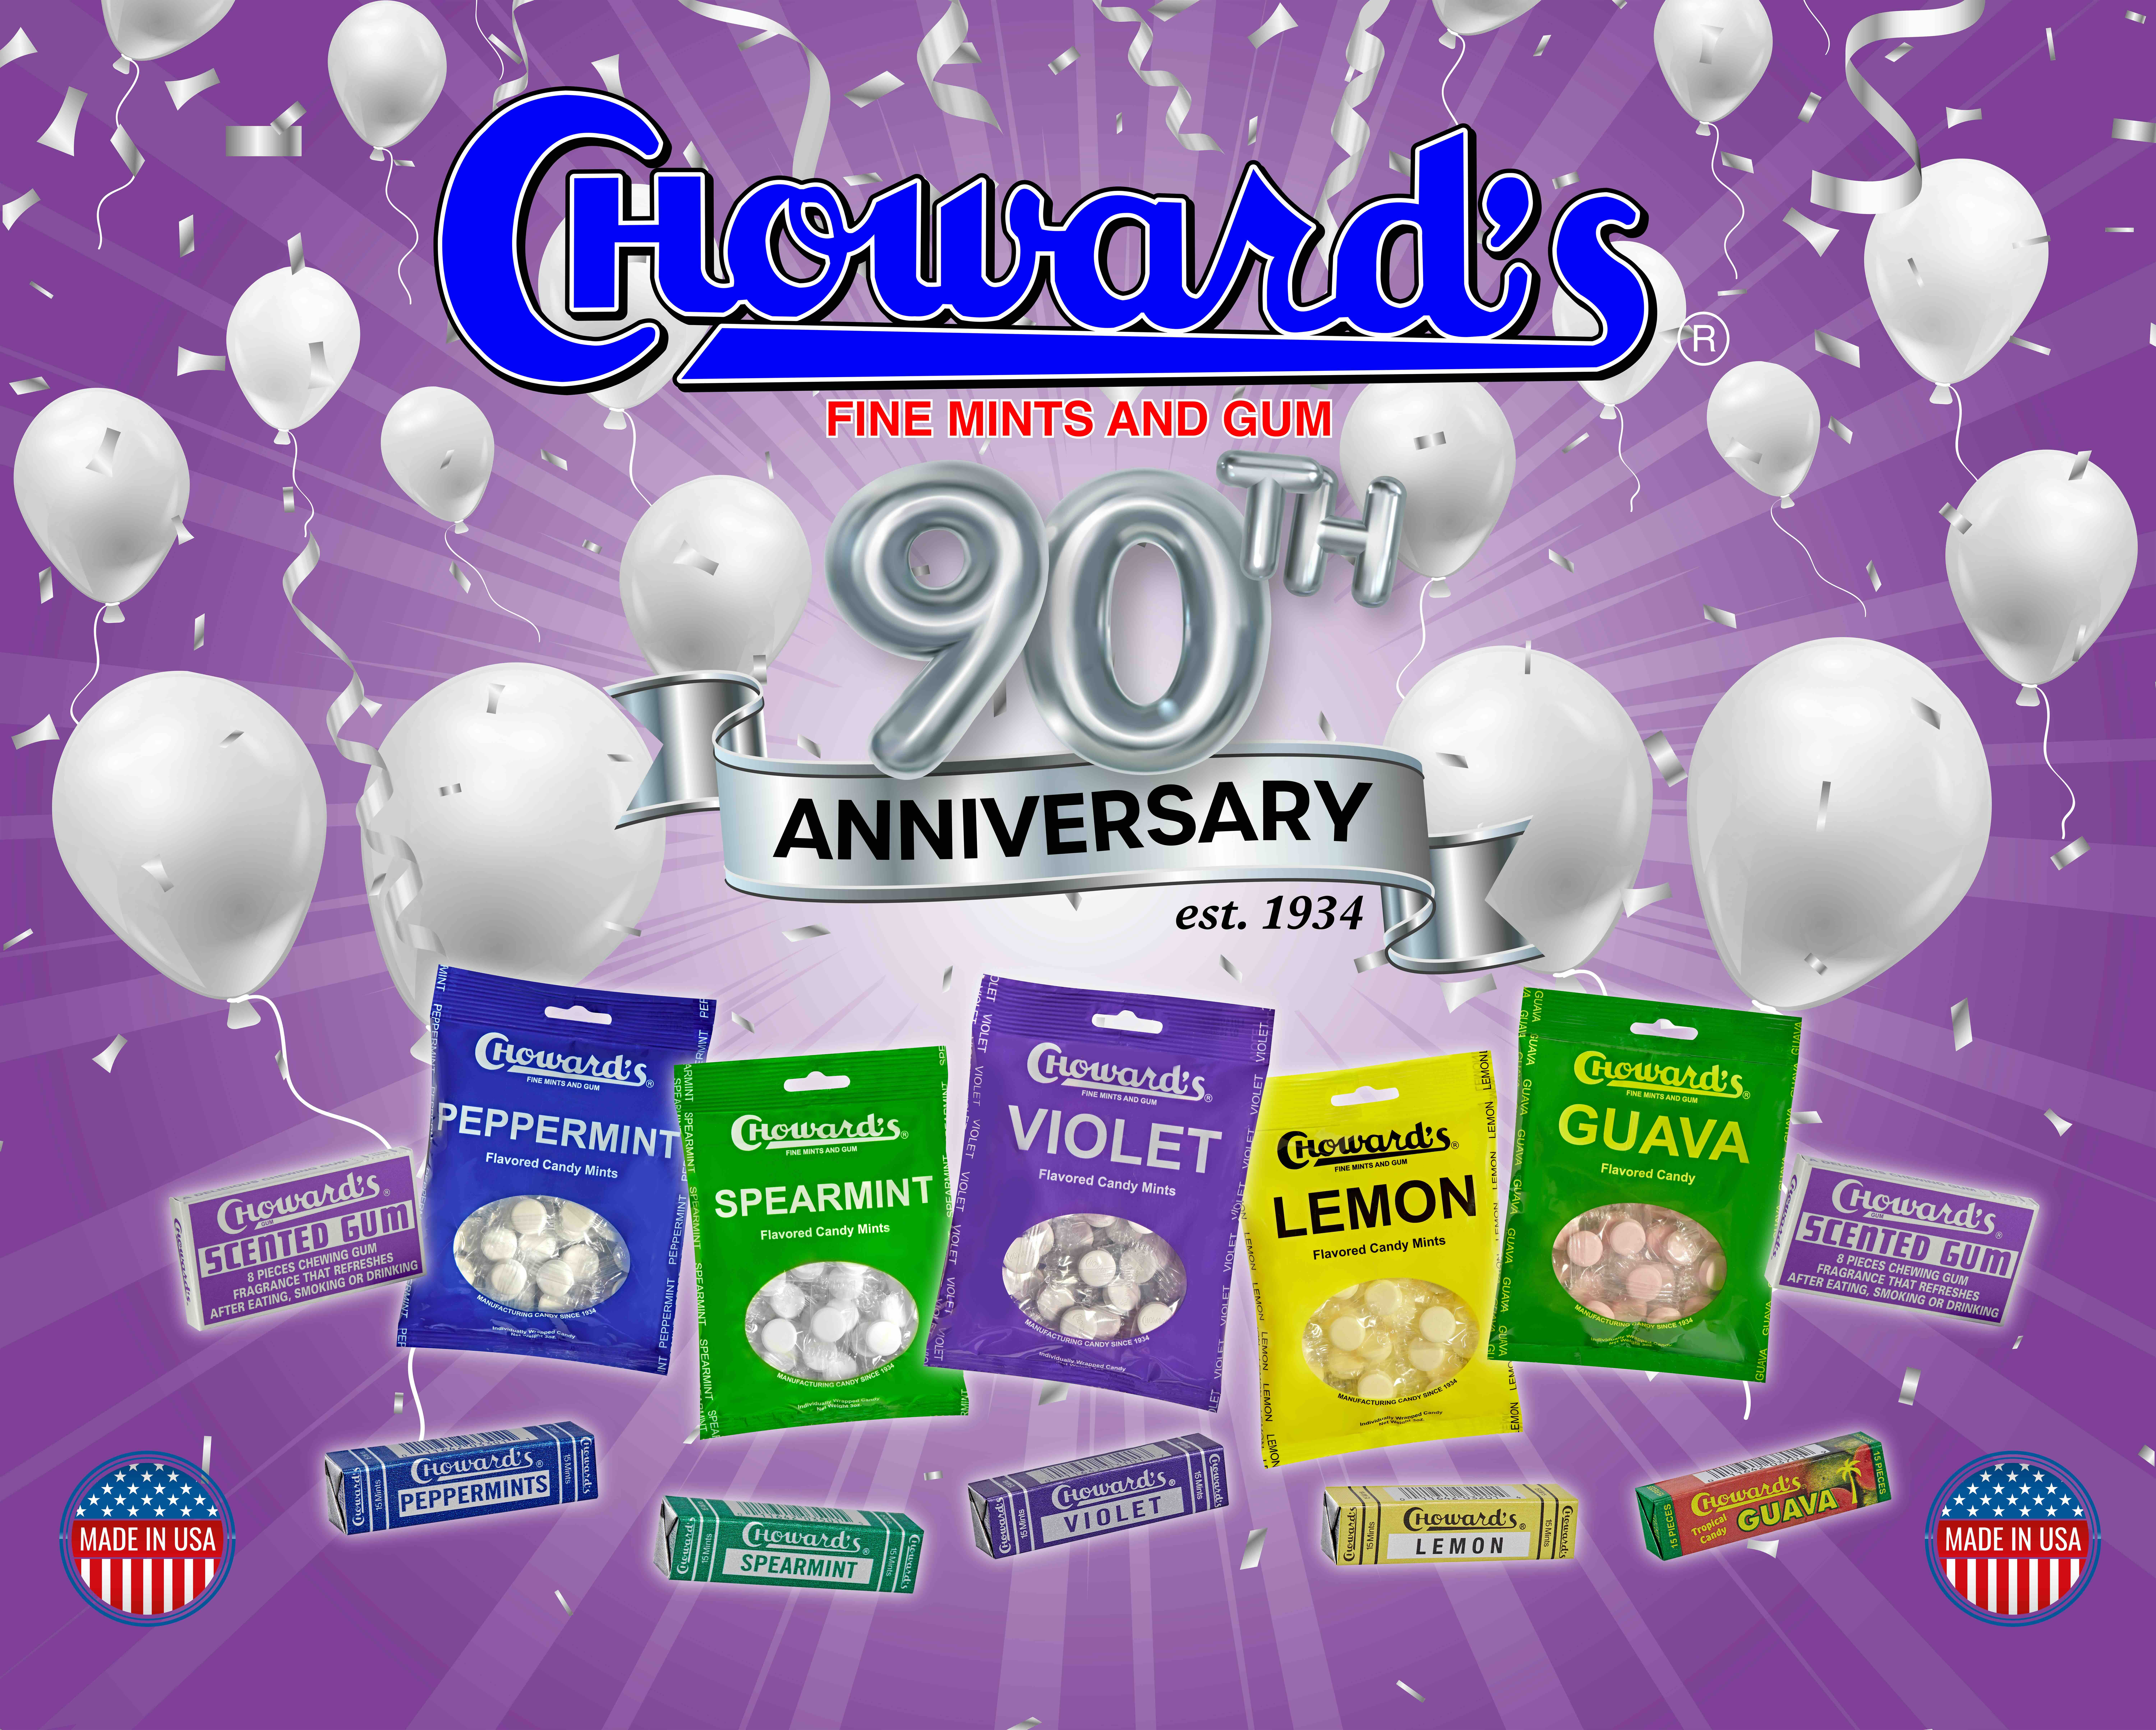 CHowards-90th-Anniversary